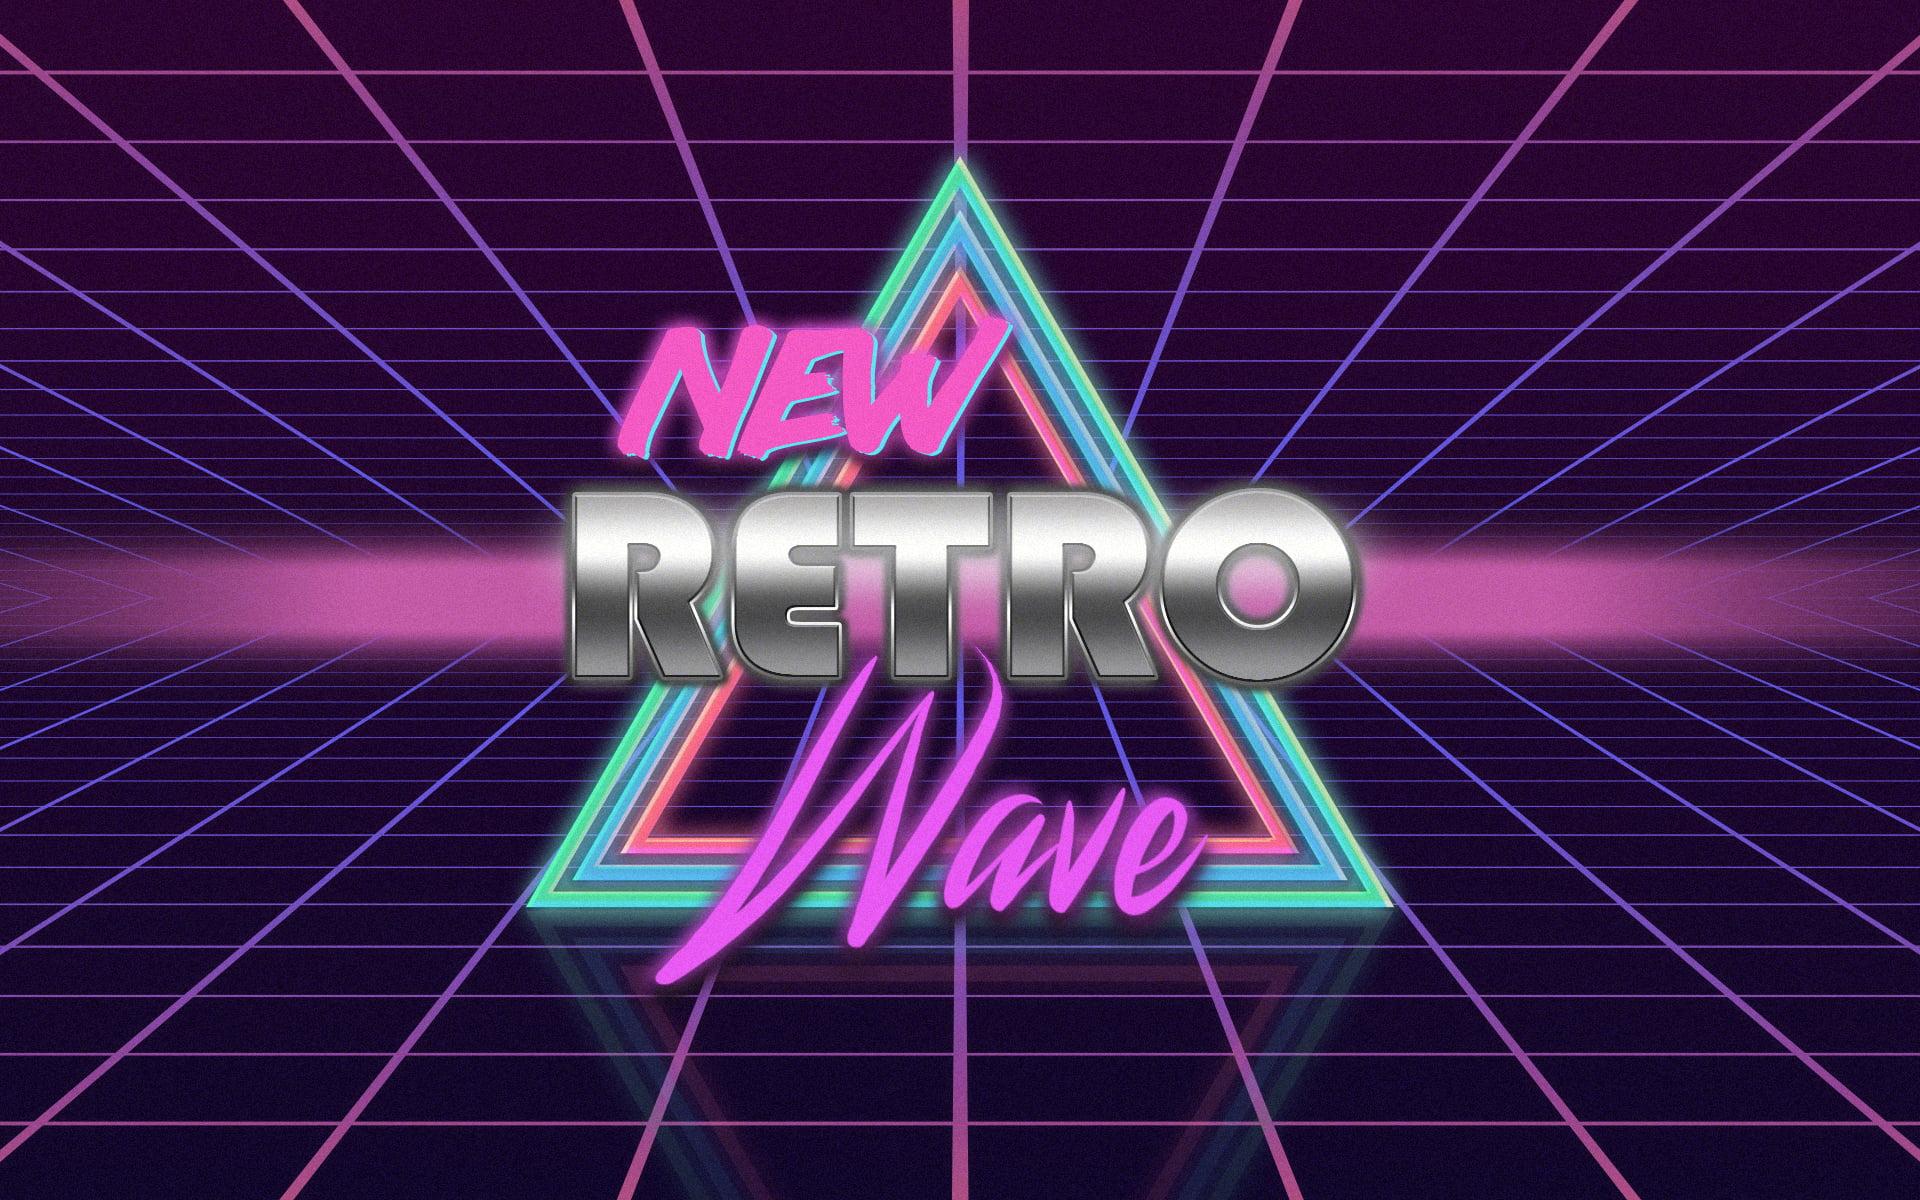 New Retro Wave wallpaper, Retro style, neon, 1980s, vintage HD